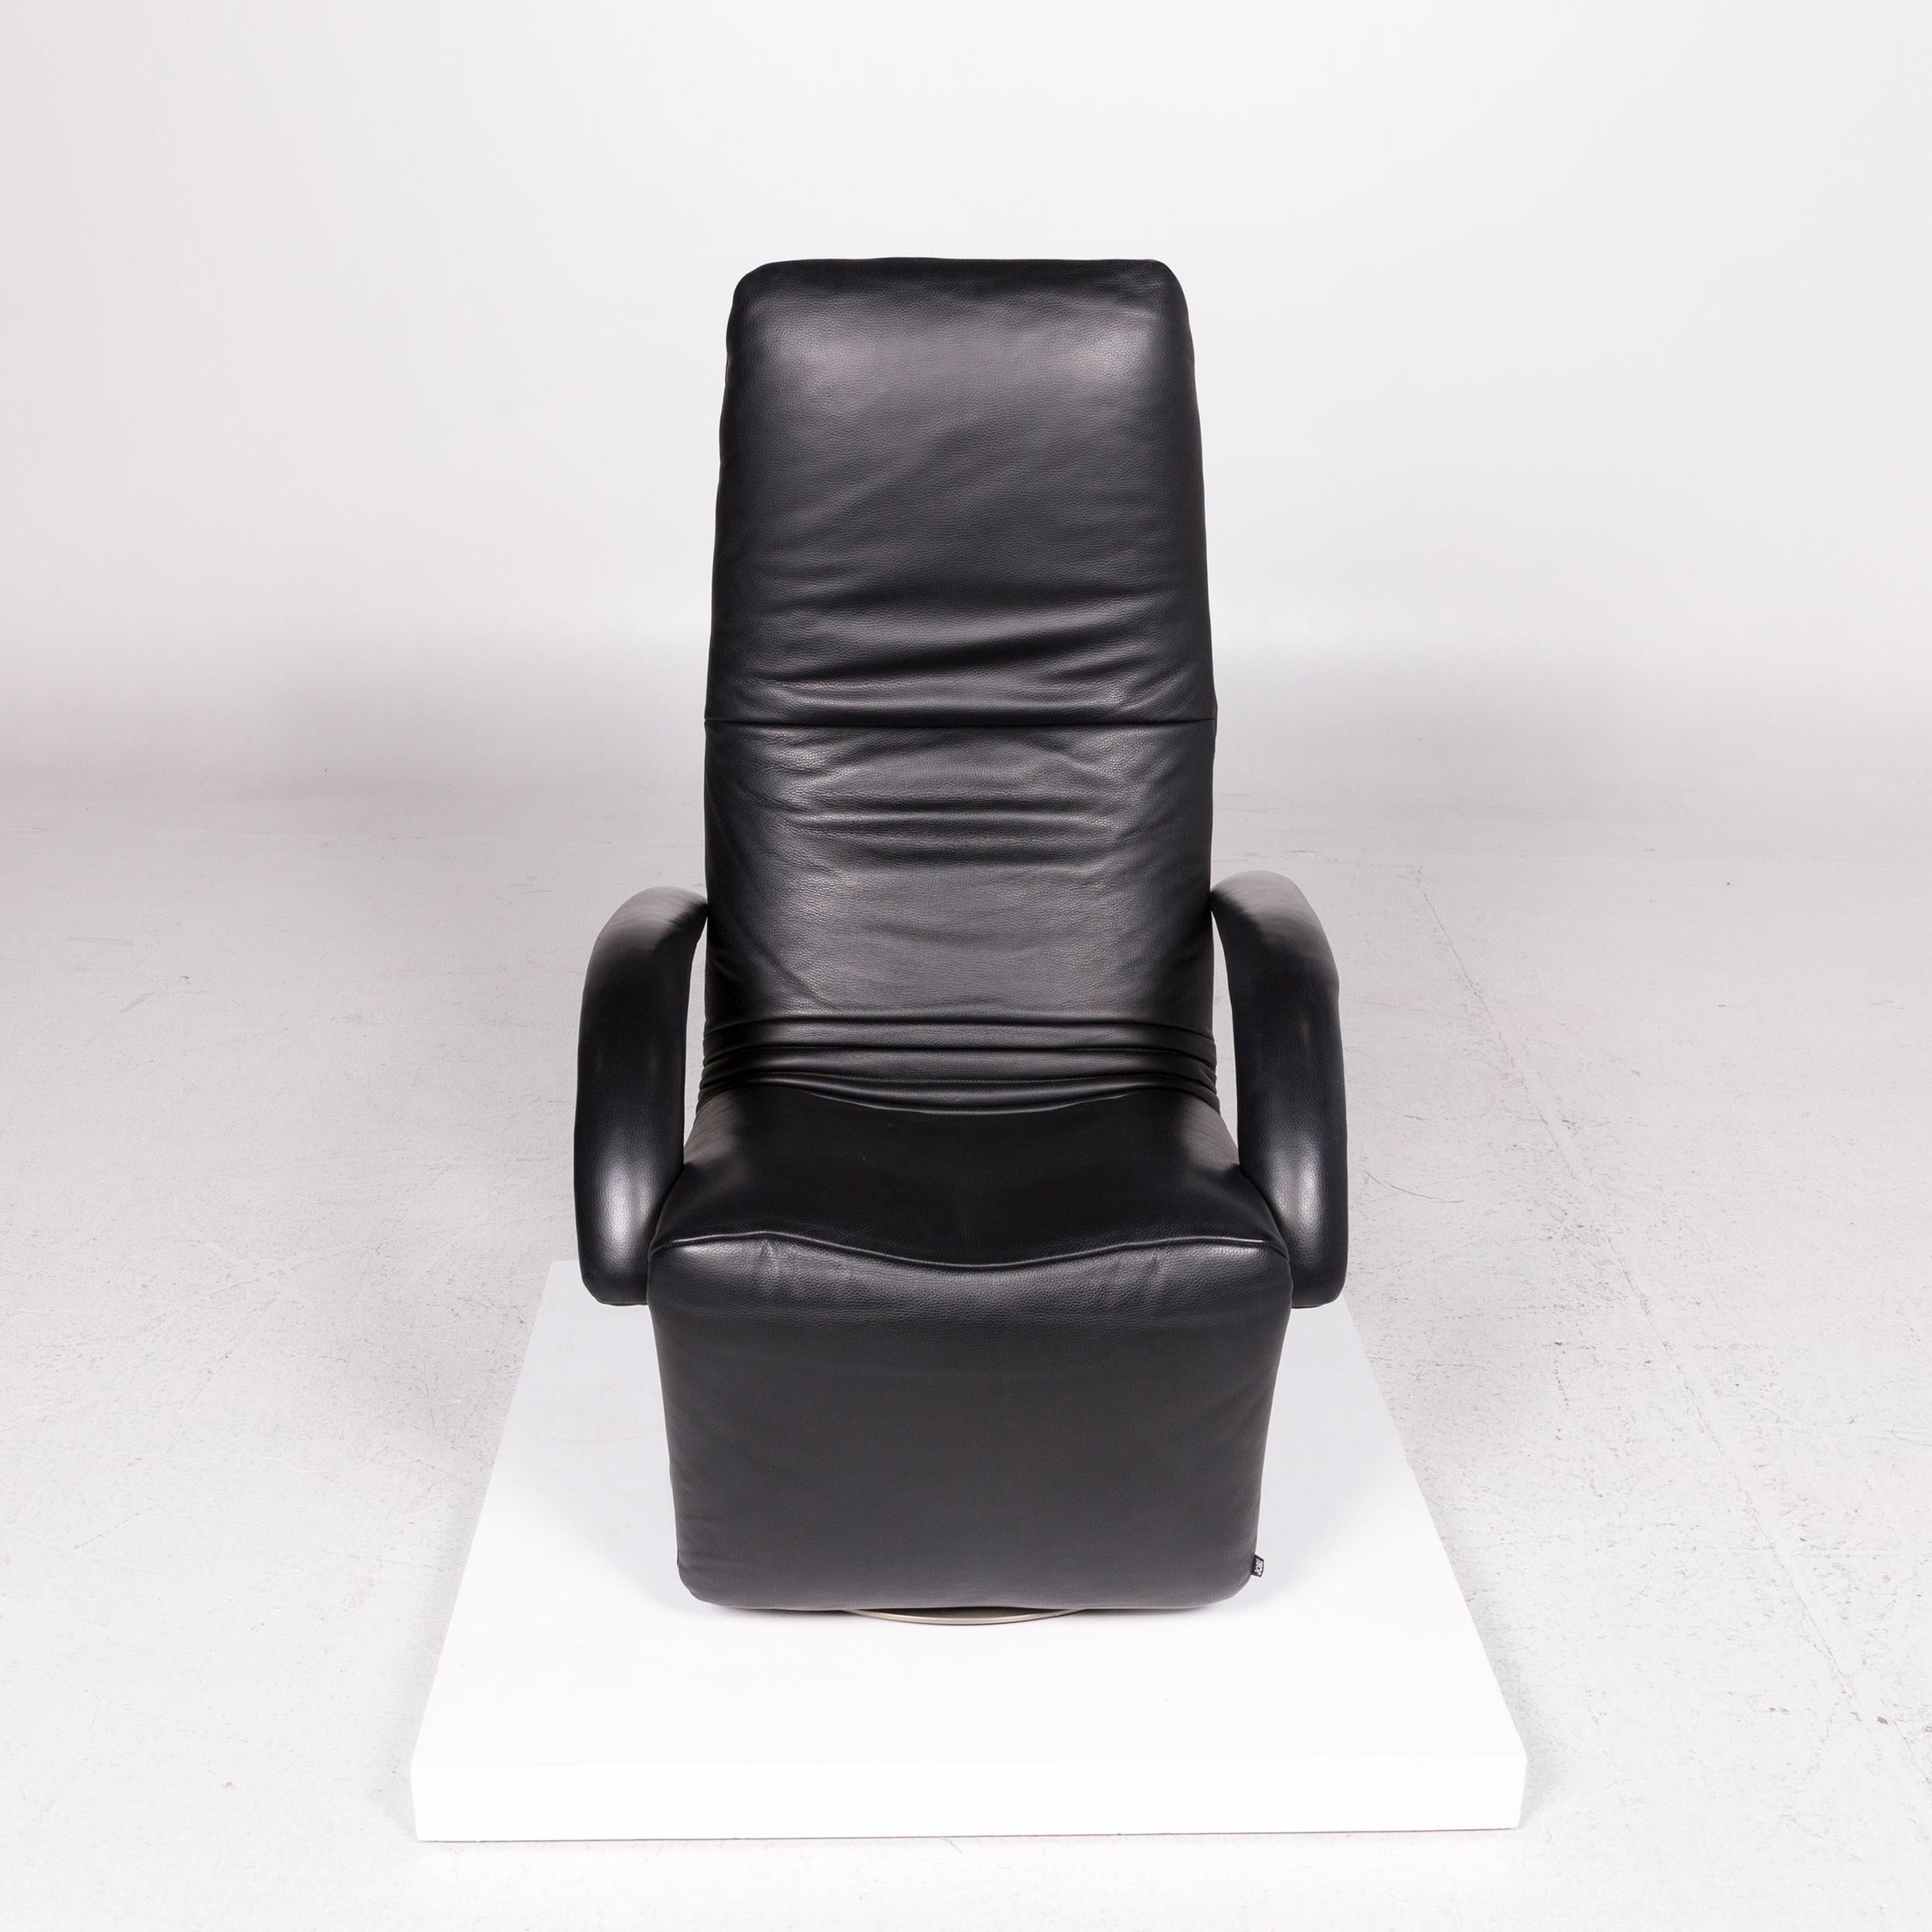 JORI Leather Armchair Black Relax Function Massage Function Massage Chair 2